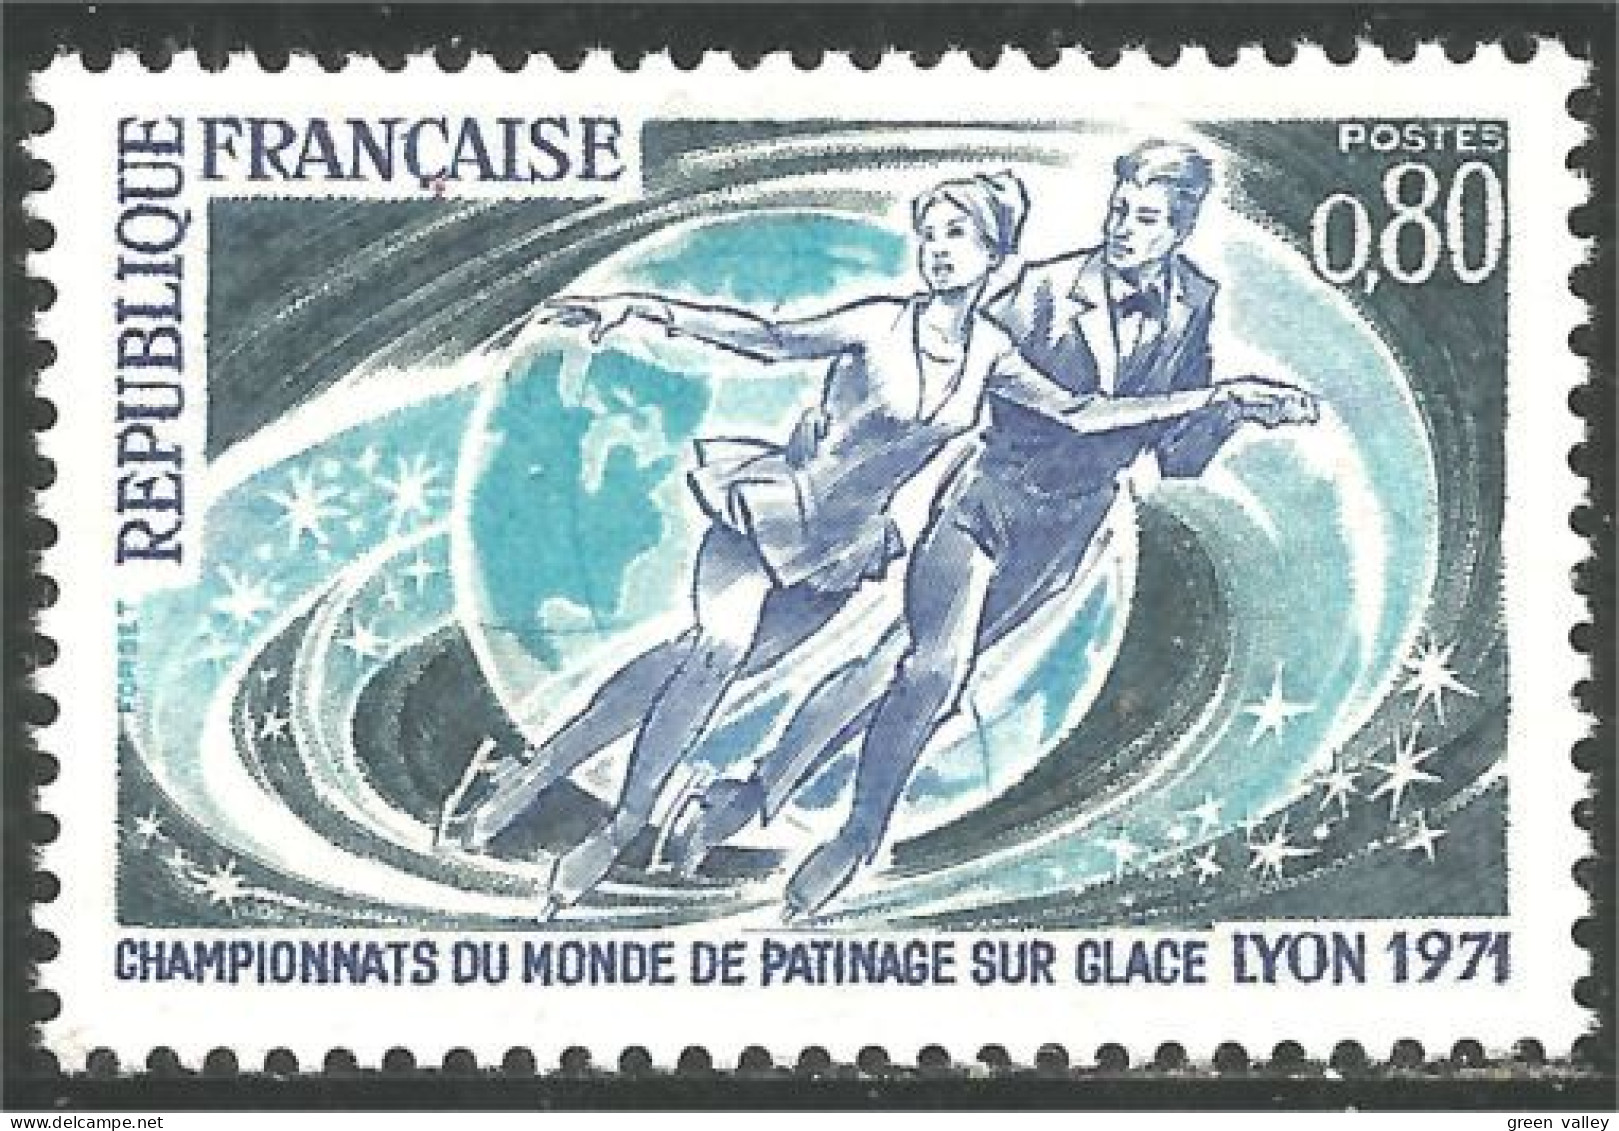 346 France Yv 1665 Patinage Artistique Figure Skating Eiskunstlauf Pattinaggio MNH ** Neuf SC (1665-1b) - Invierno